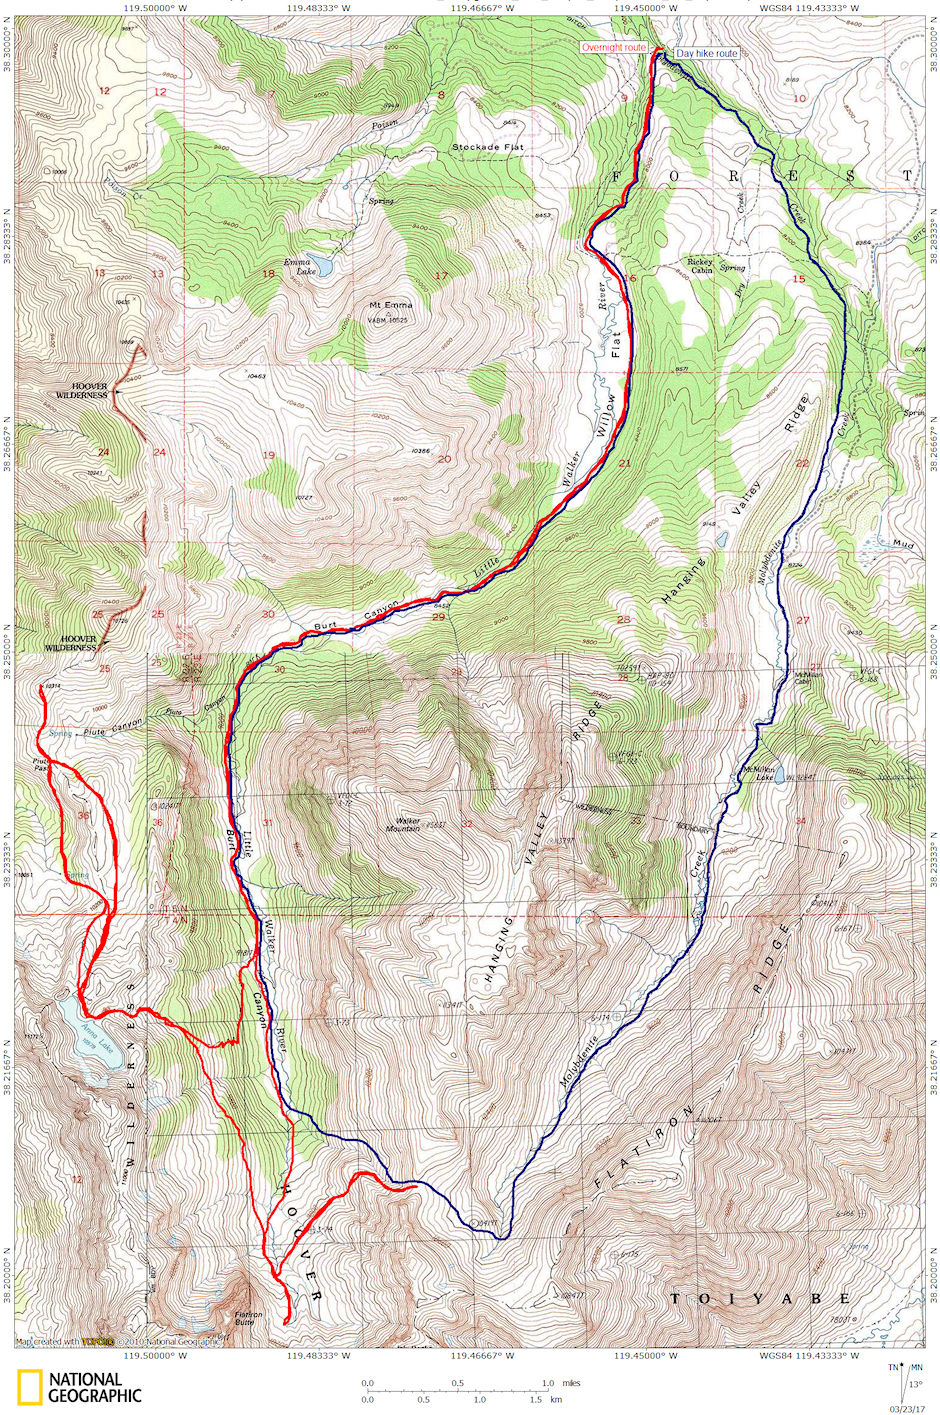 Obsidean Campground, Burt Canyon, Molybdenite Creek Eploration 1995